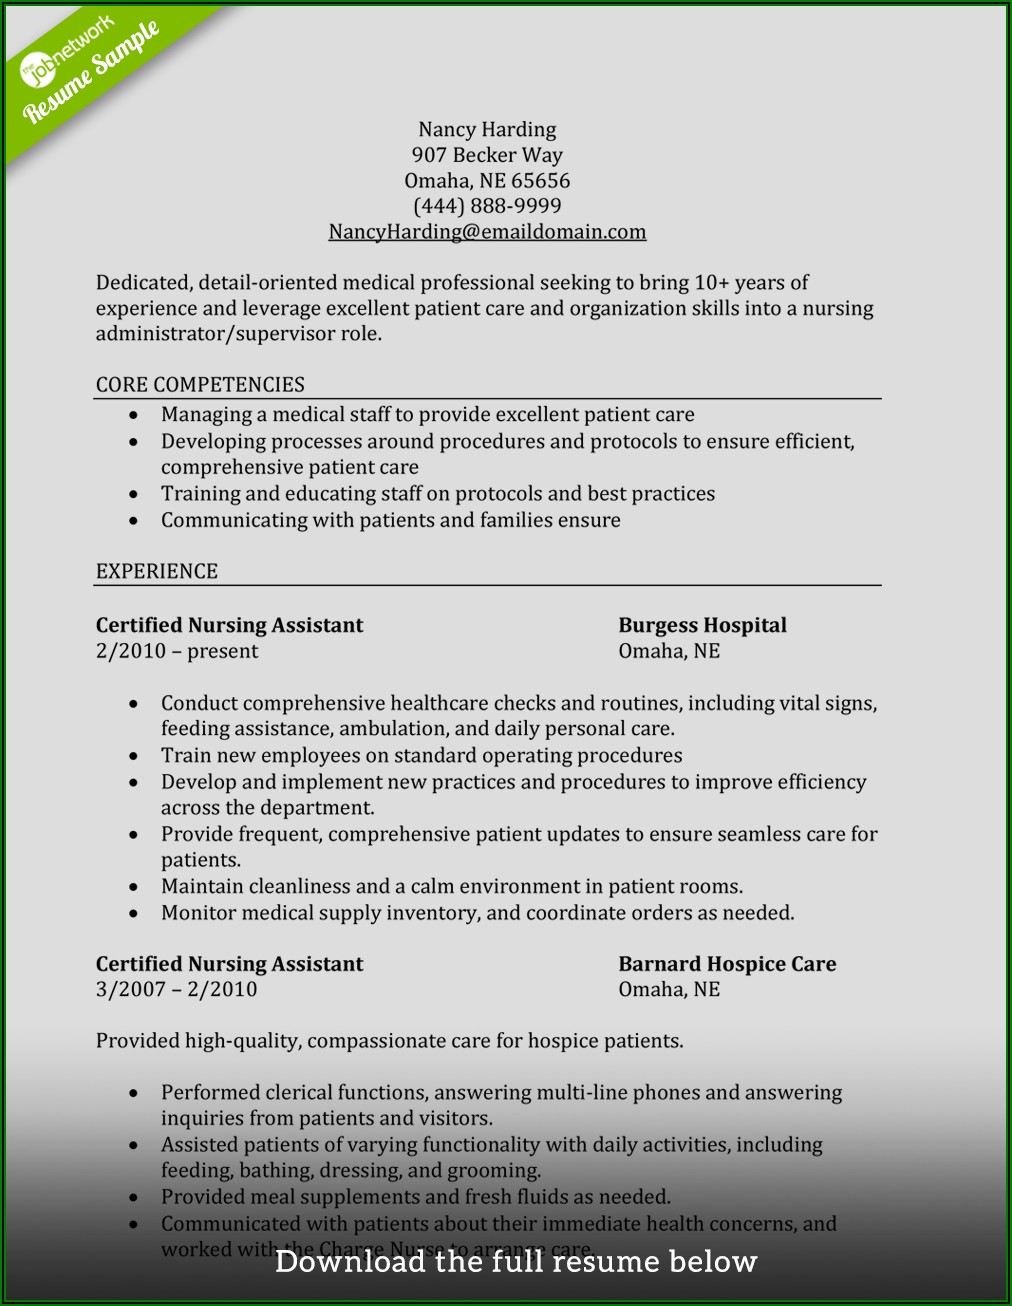 Professional Summary For Nursing Aide